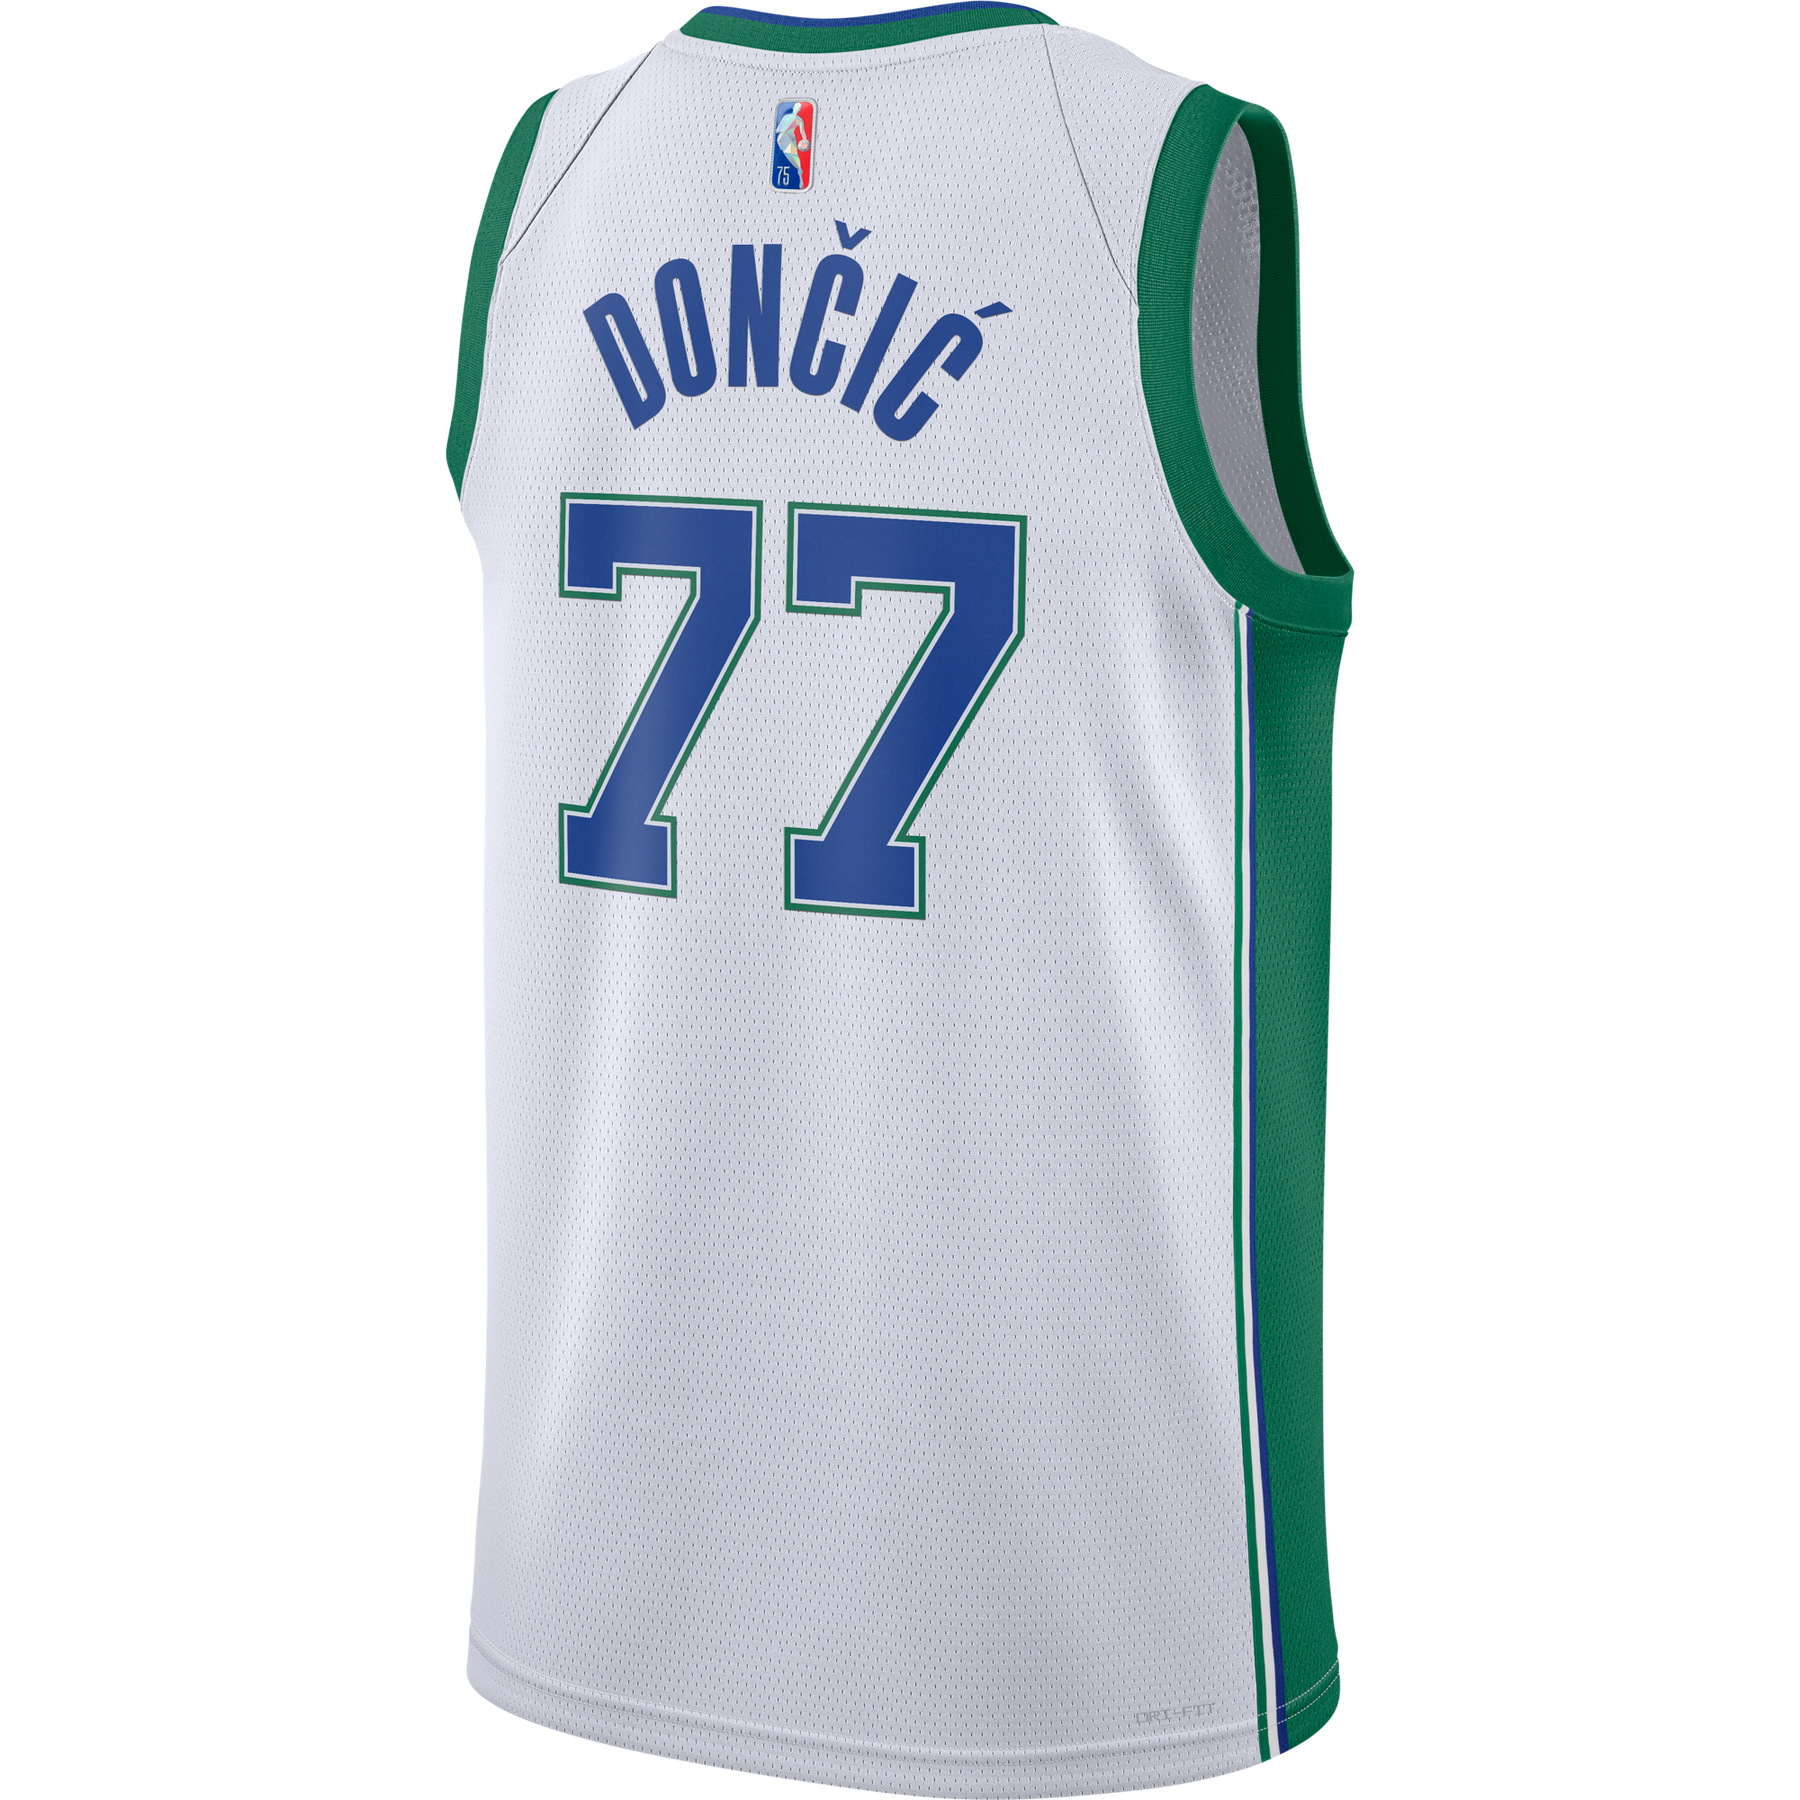 Luka Doncic Dallas Mavericks Nike Youth Swingman Jersey Blue - City Edition